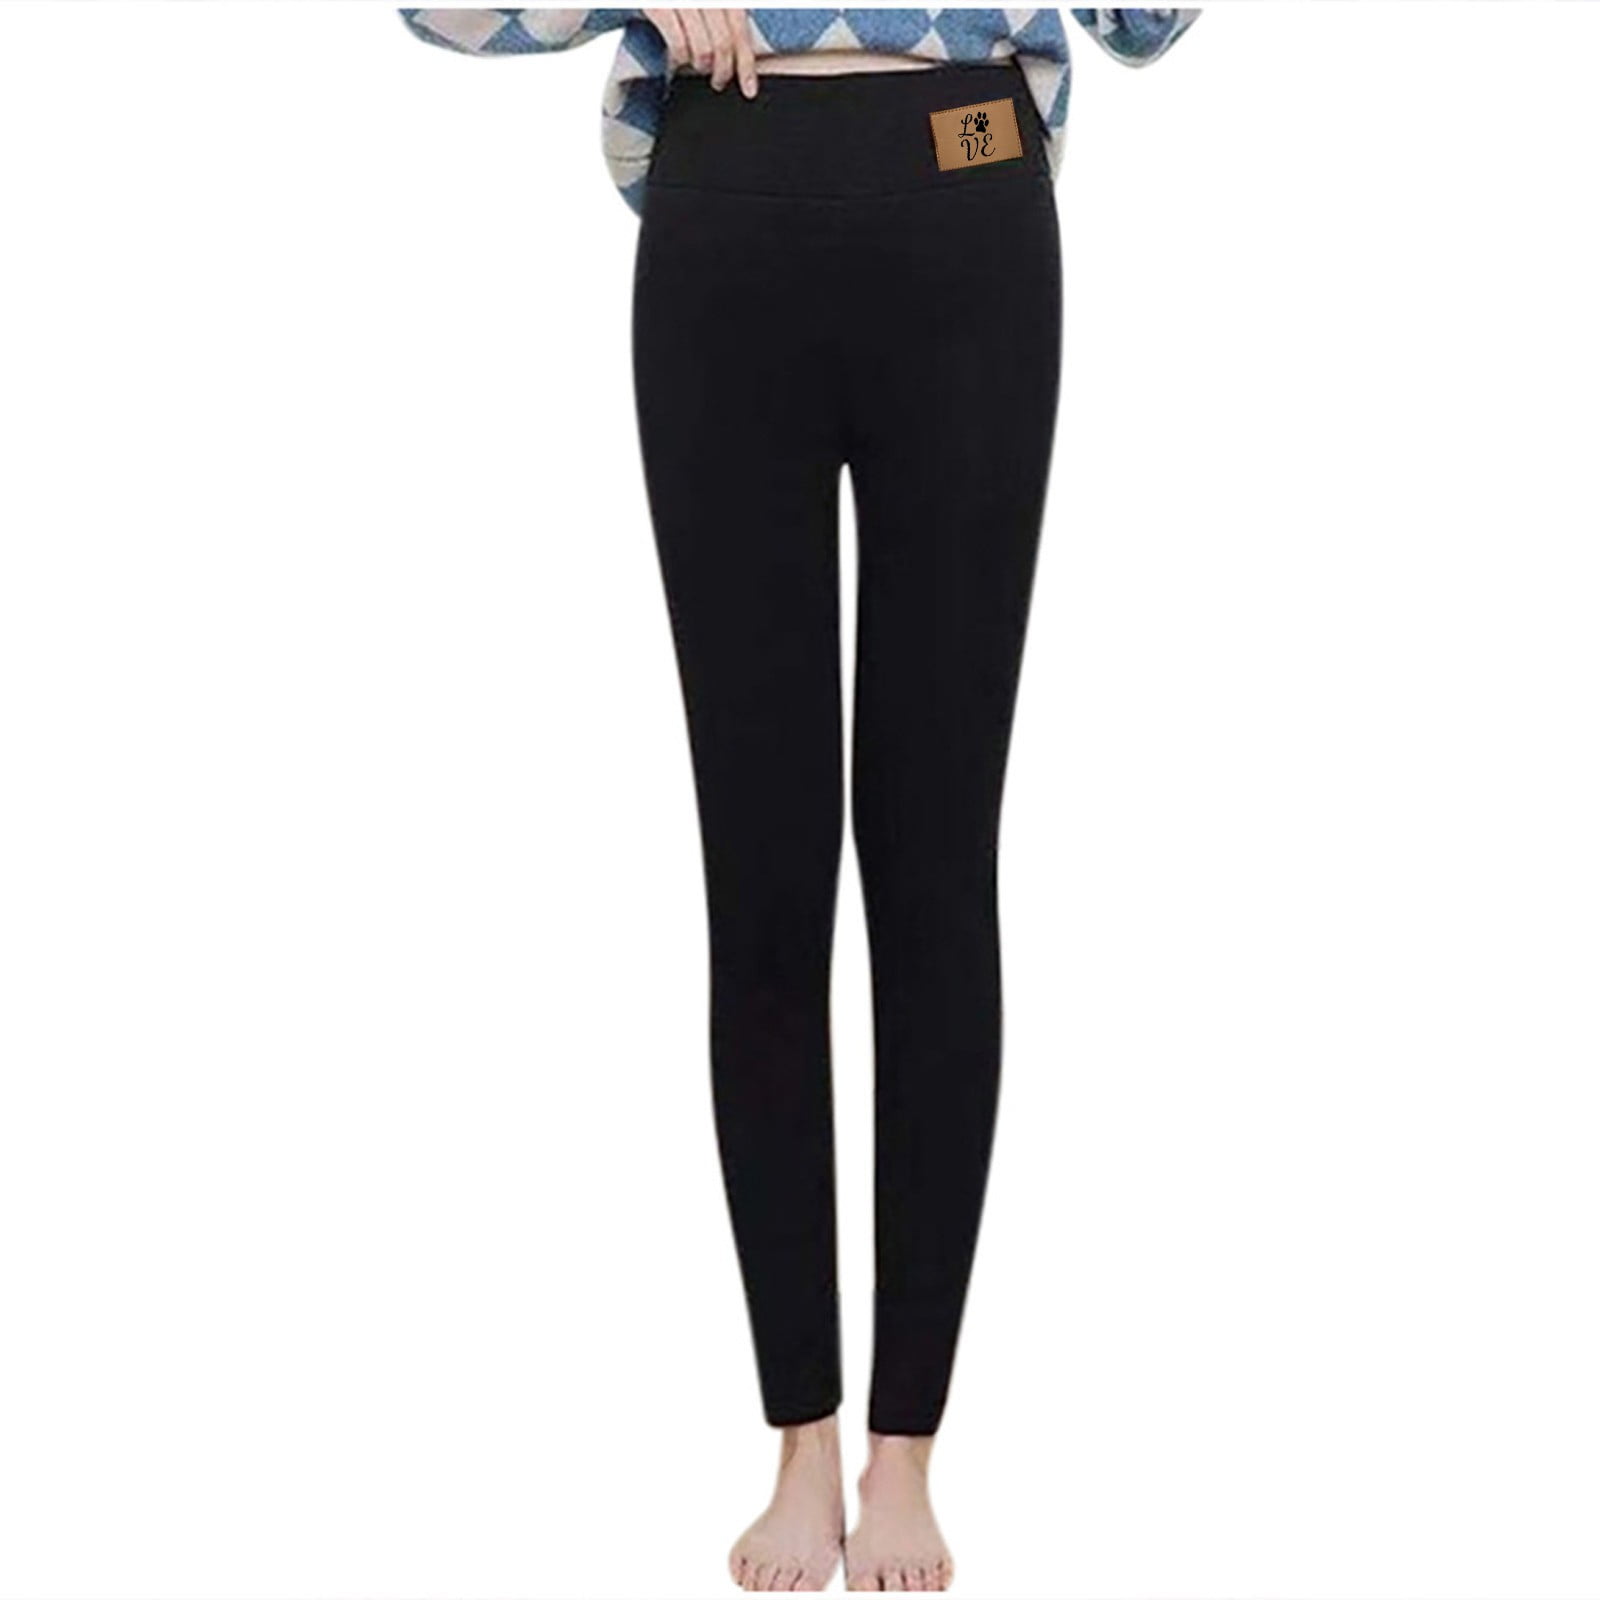 Homma, Pants & Jumpsuits, Homma Xl Black High Waist Compression Leggings